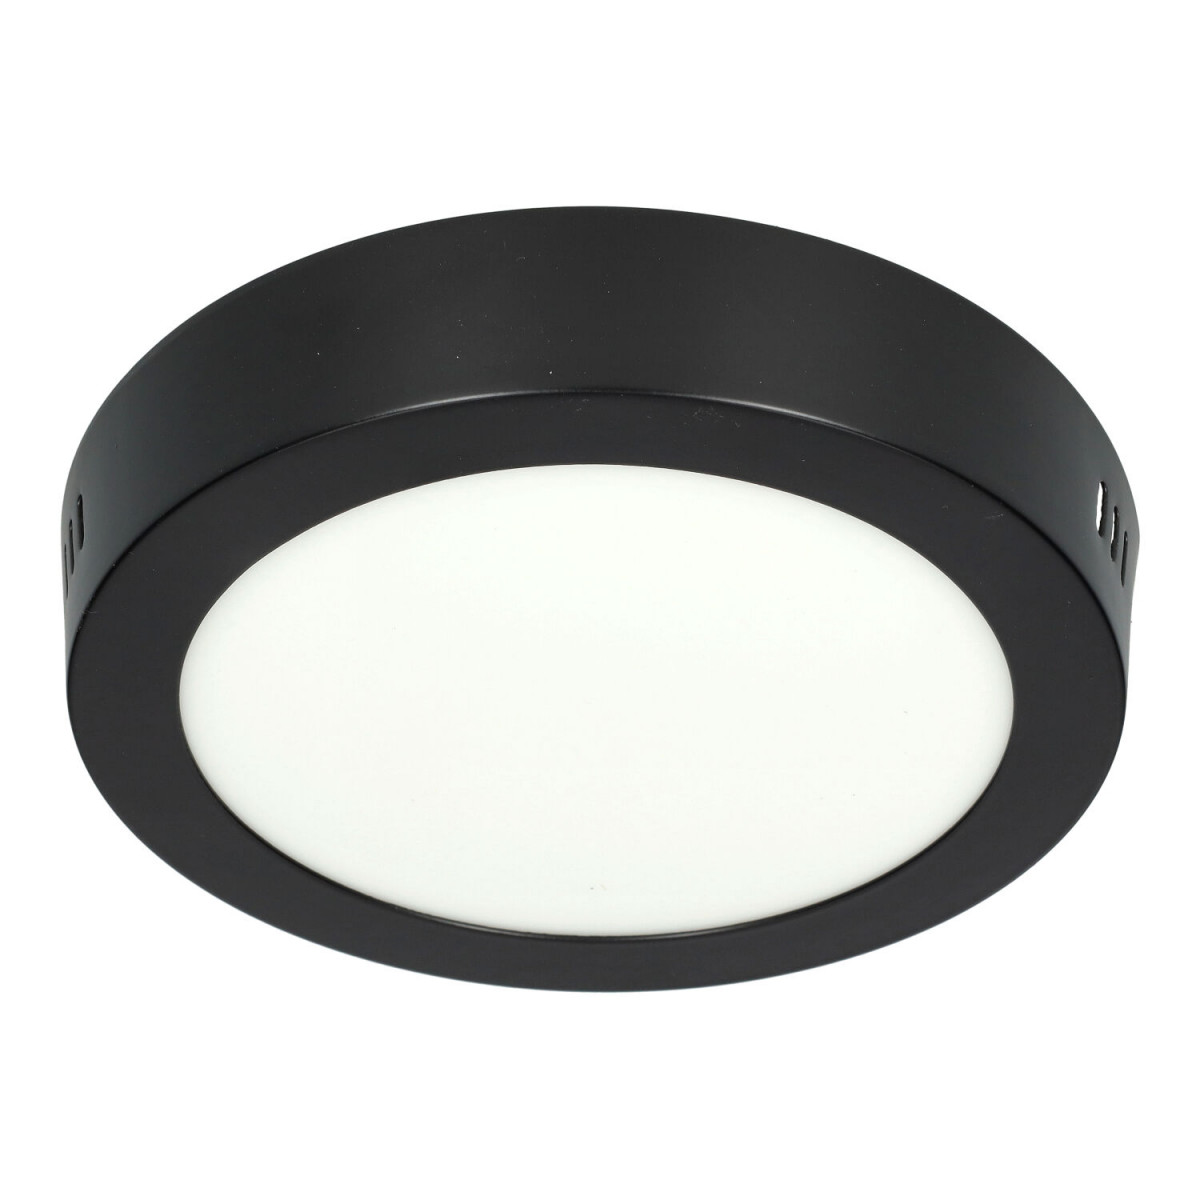 LED Ceiling Light - Round, 12W black housing